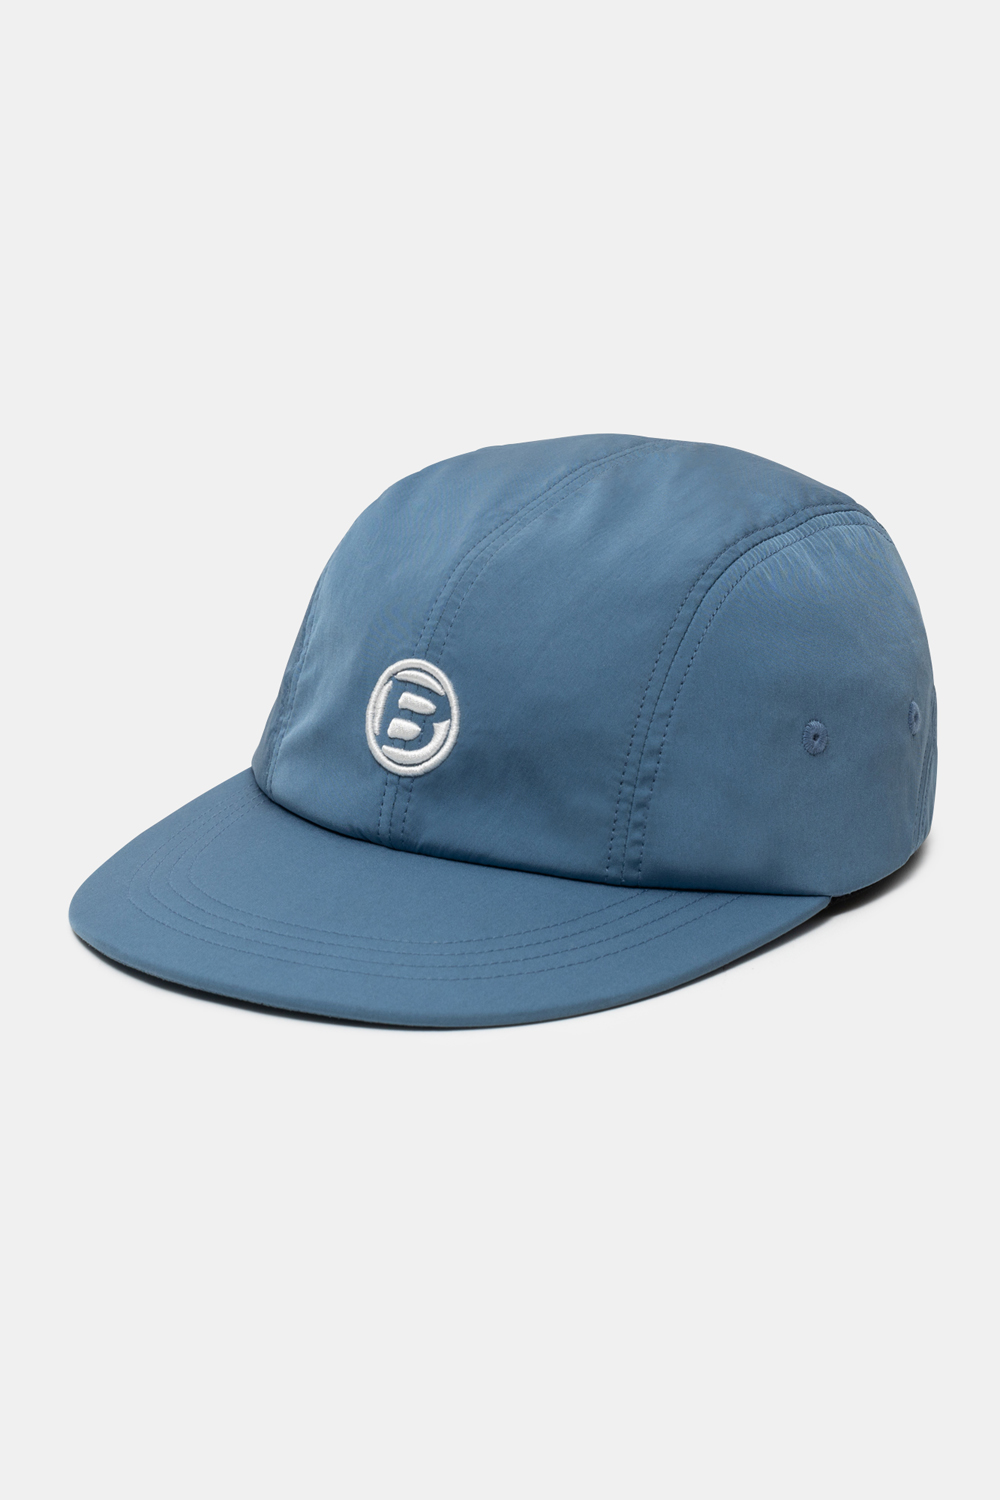 SPORTS CAP/DBLDARK BLUE